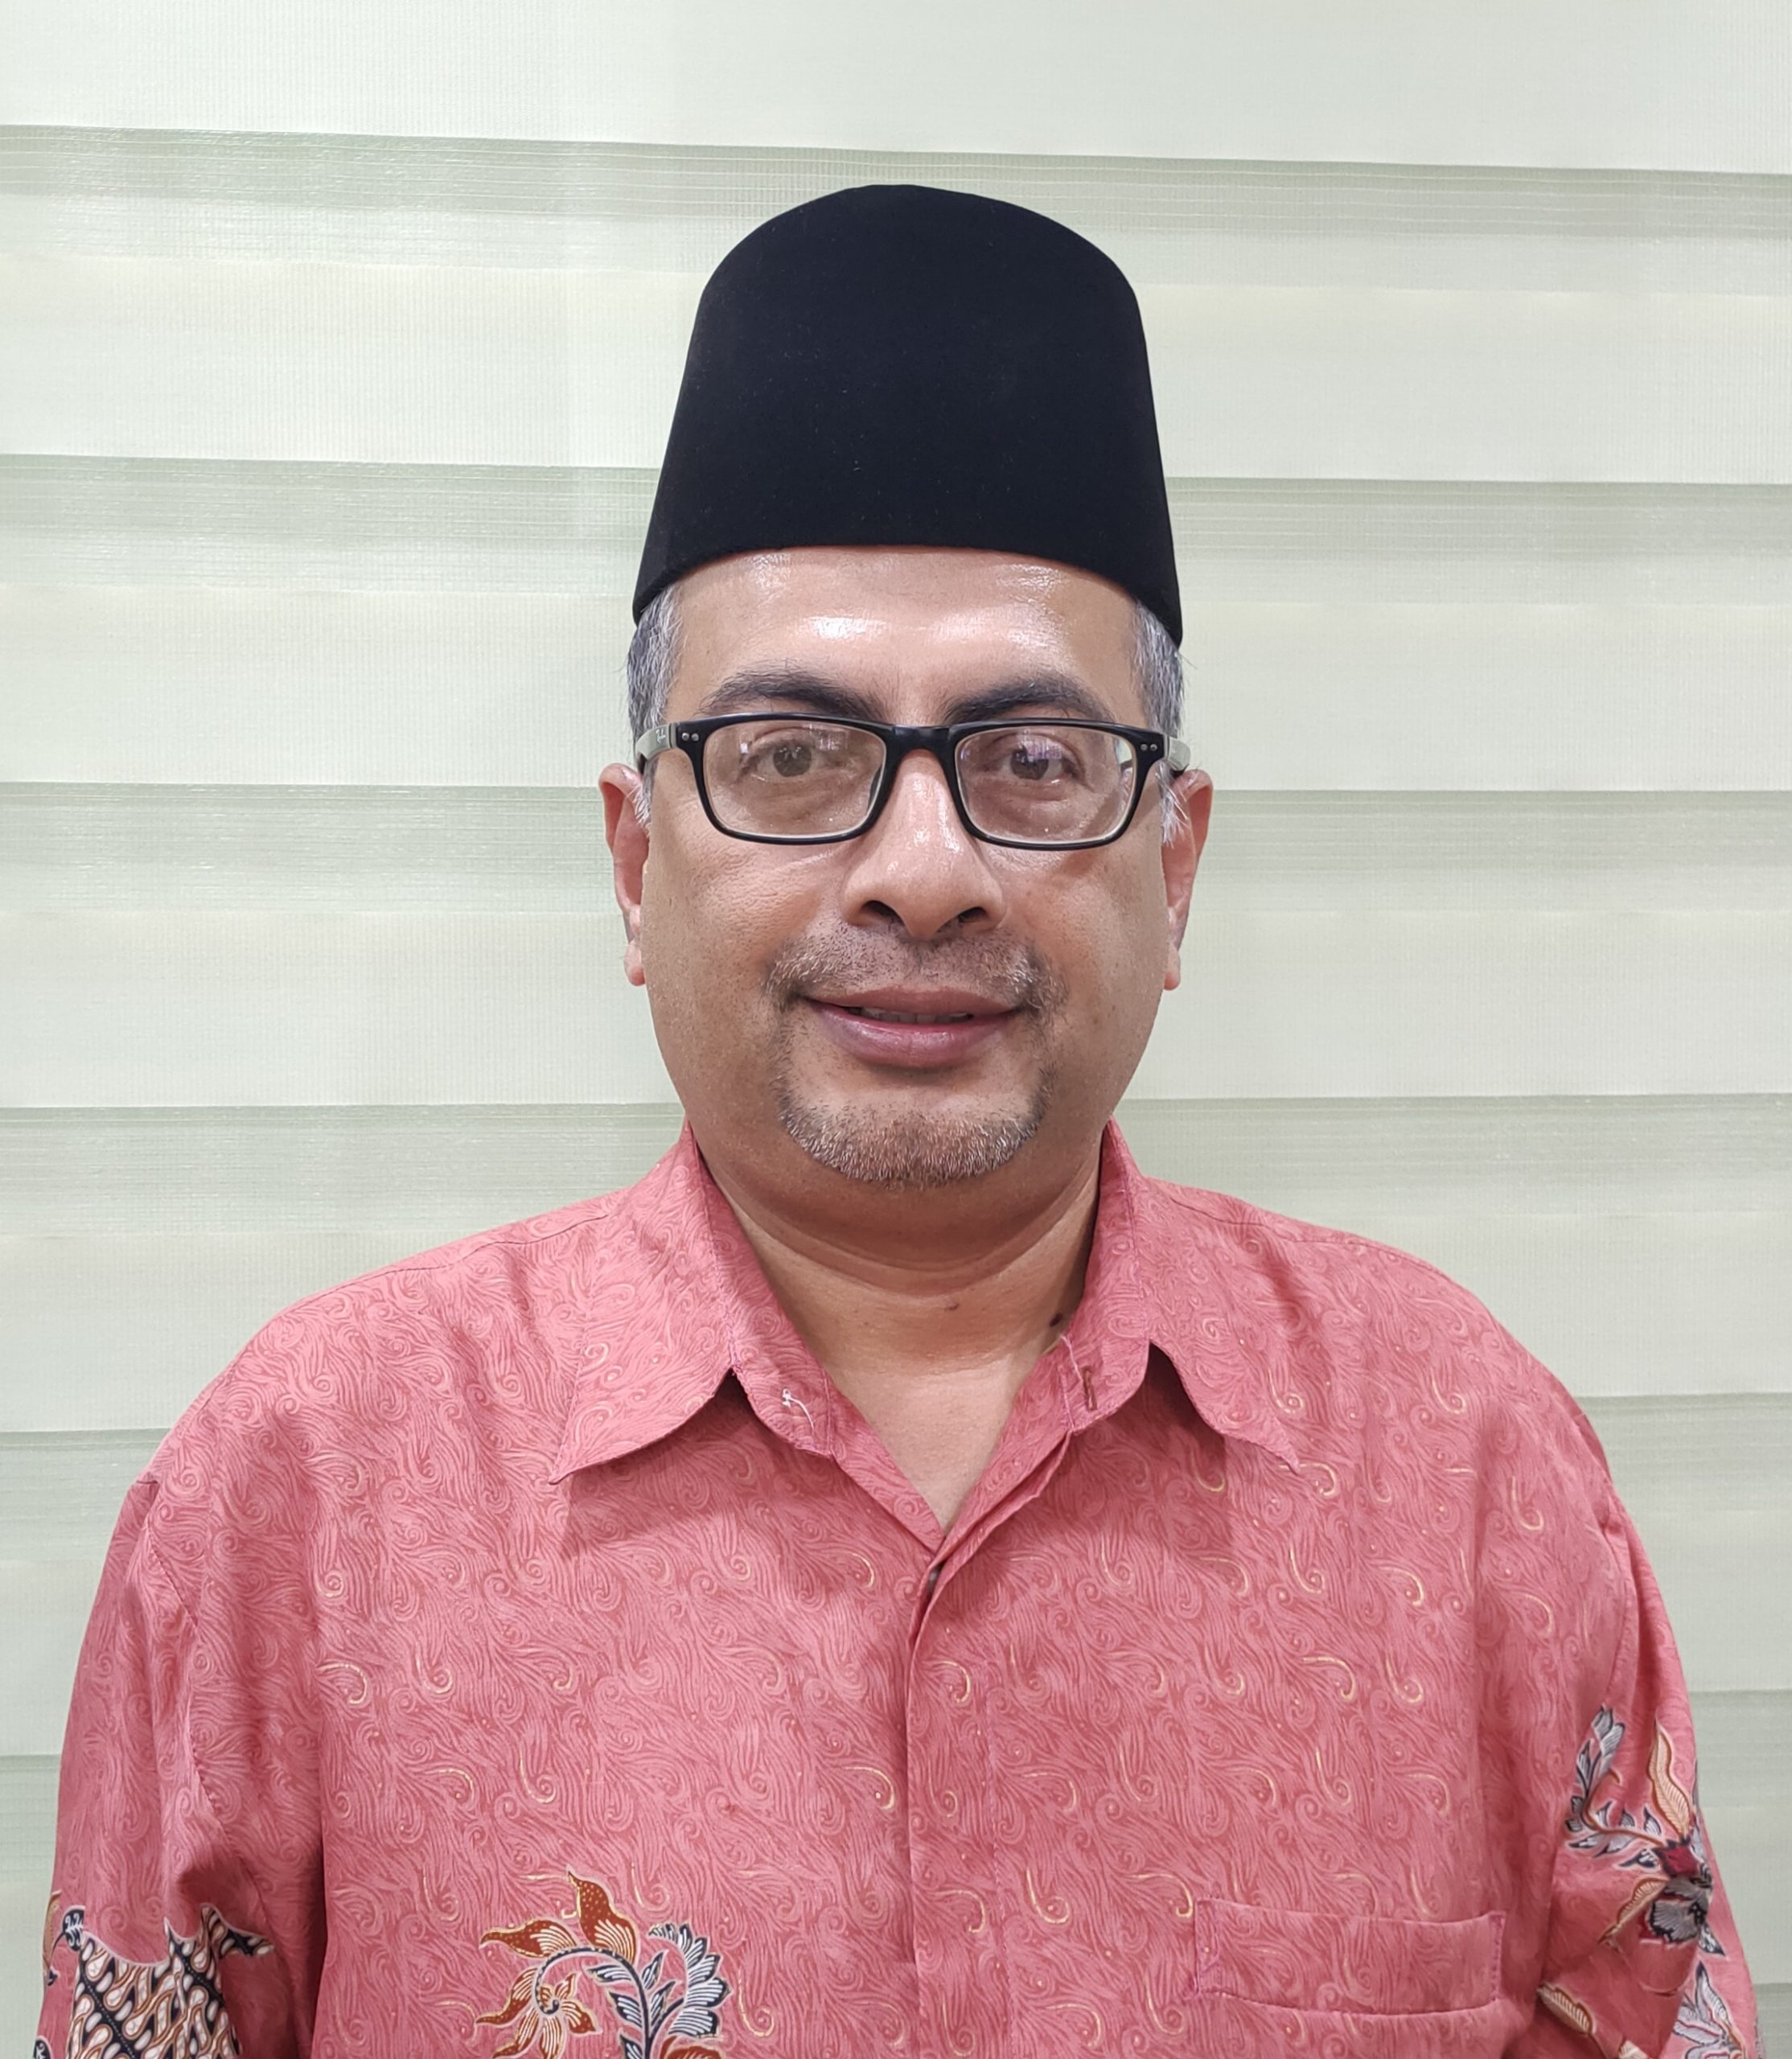 Pejabat Agama Daerah Kuala Muda - Portal Rasmi Jabatan Hal Ehwal Agama